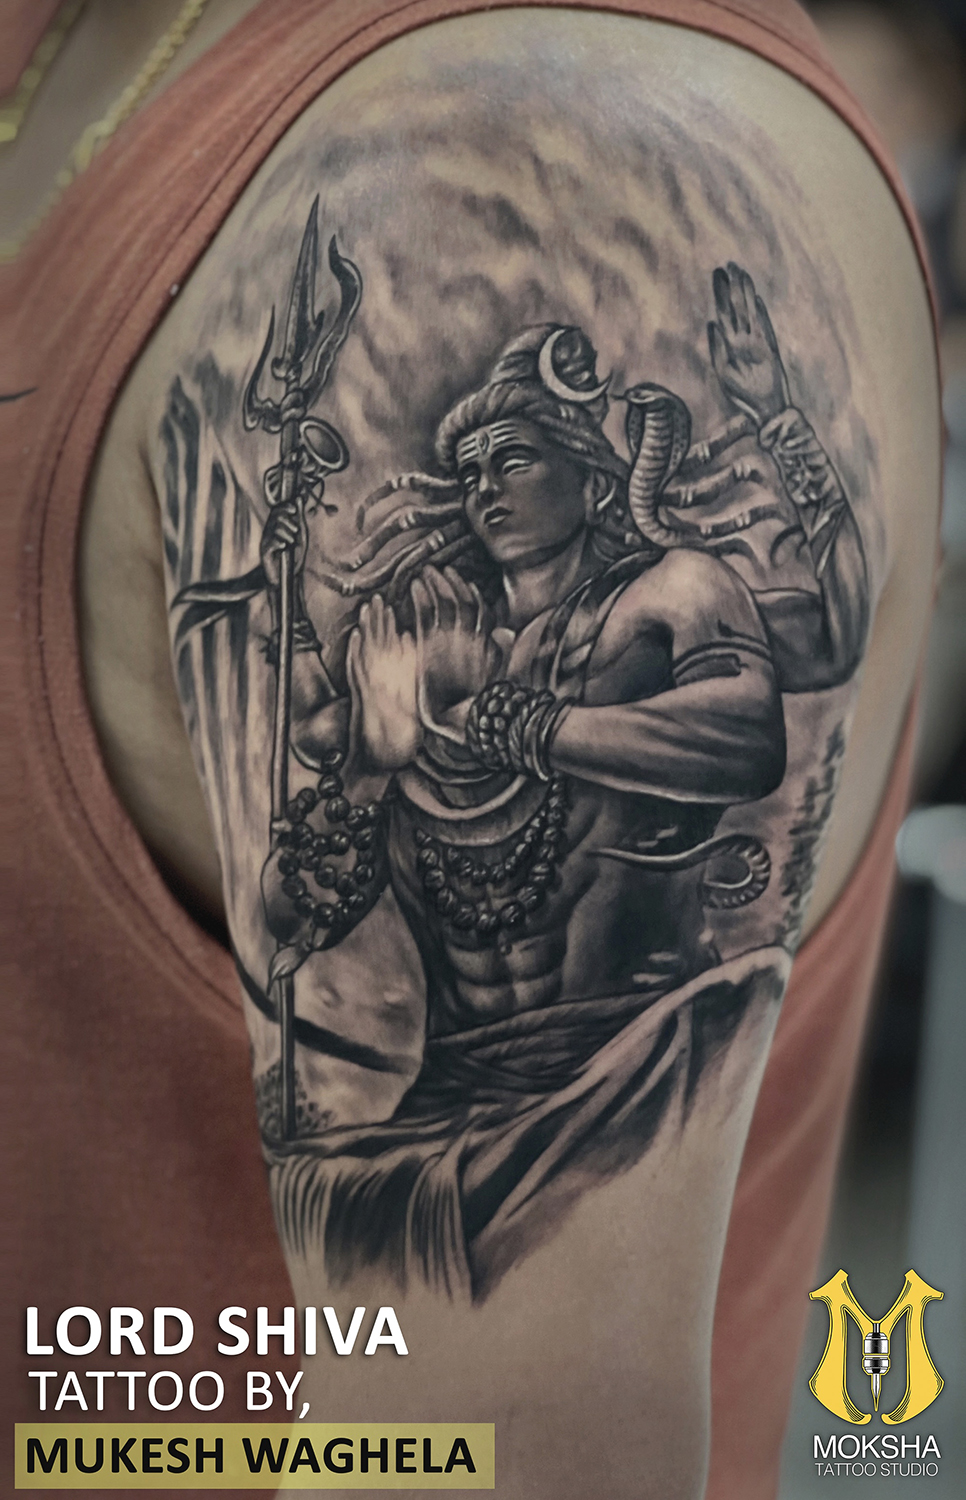 Lord Shiva Tattoo By Mukesh Waghela Best Tattoo Artist In Goa At Moksha Tattoo Studio Goa India.